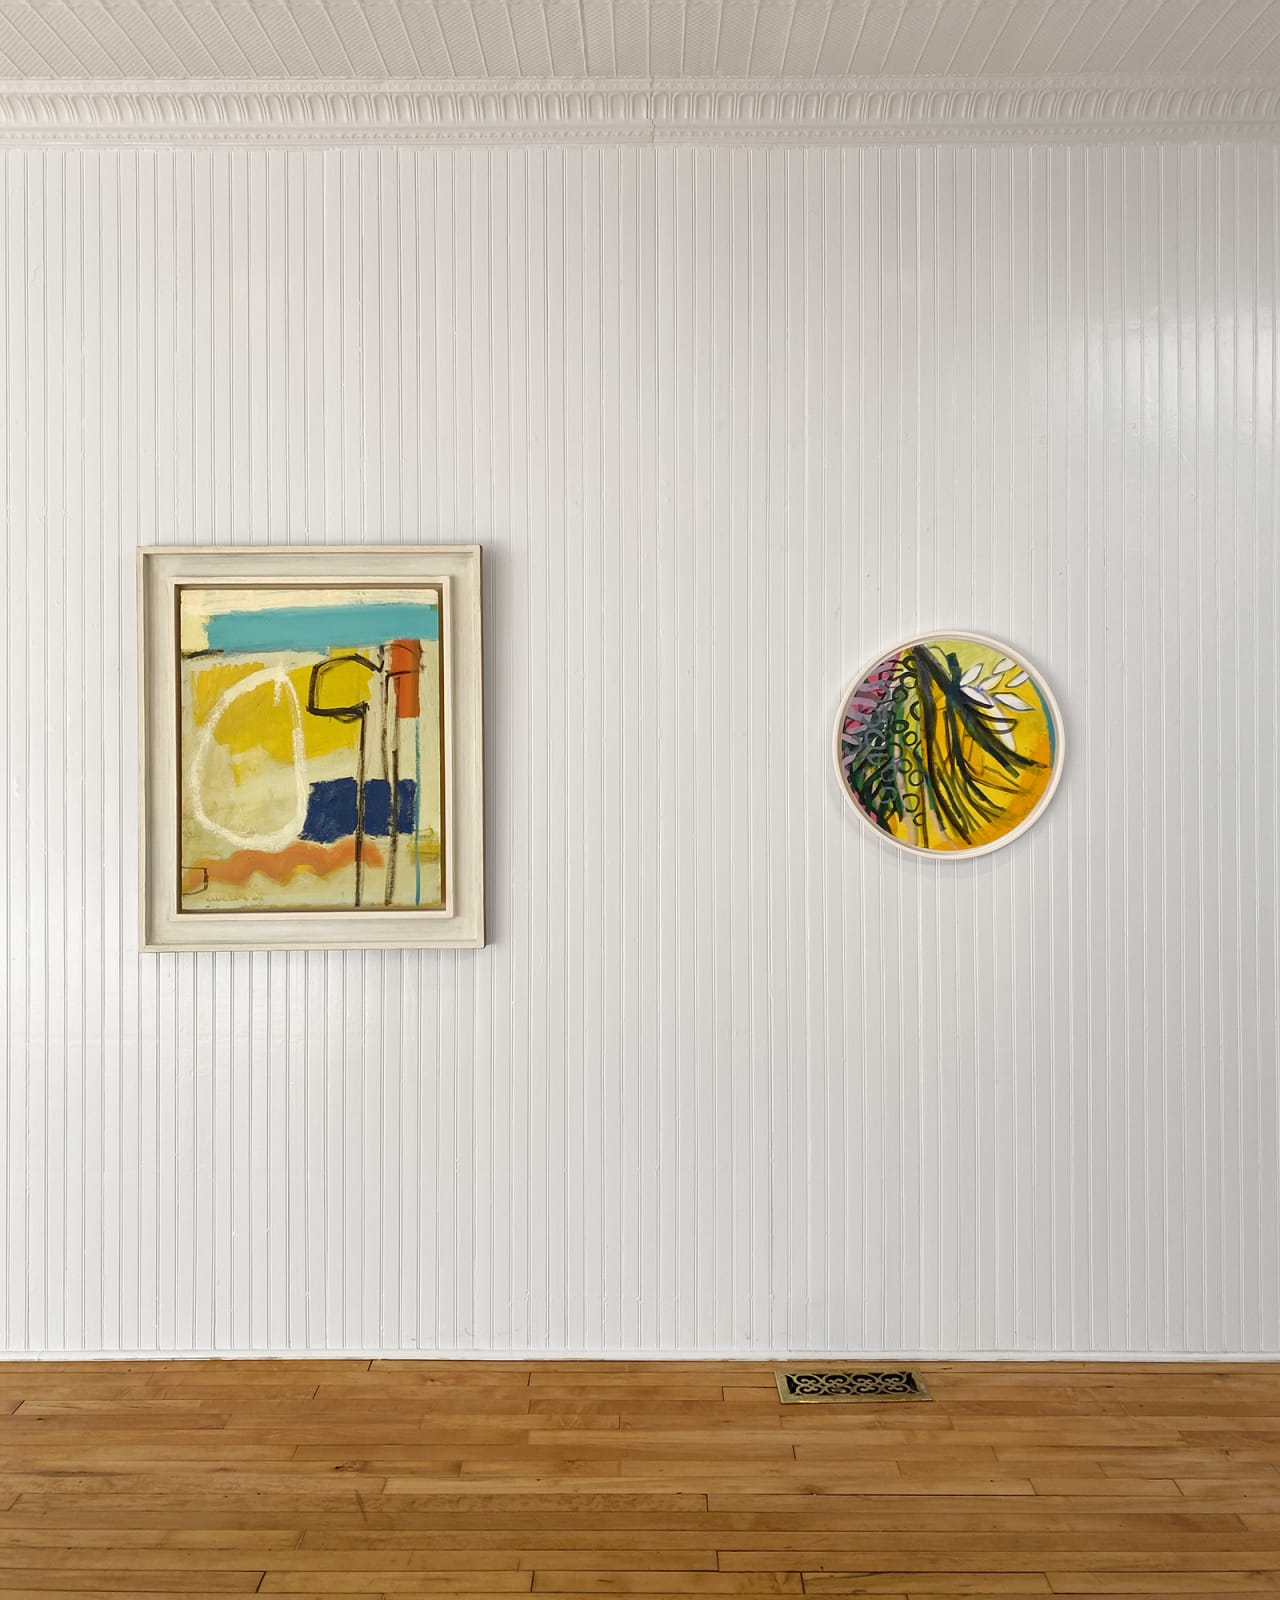 Installation view: Parallels: Chloë Lamb and Bill Scott